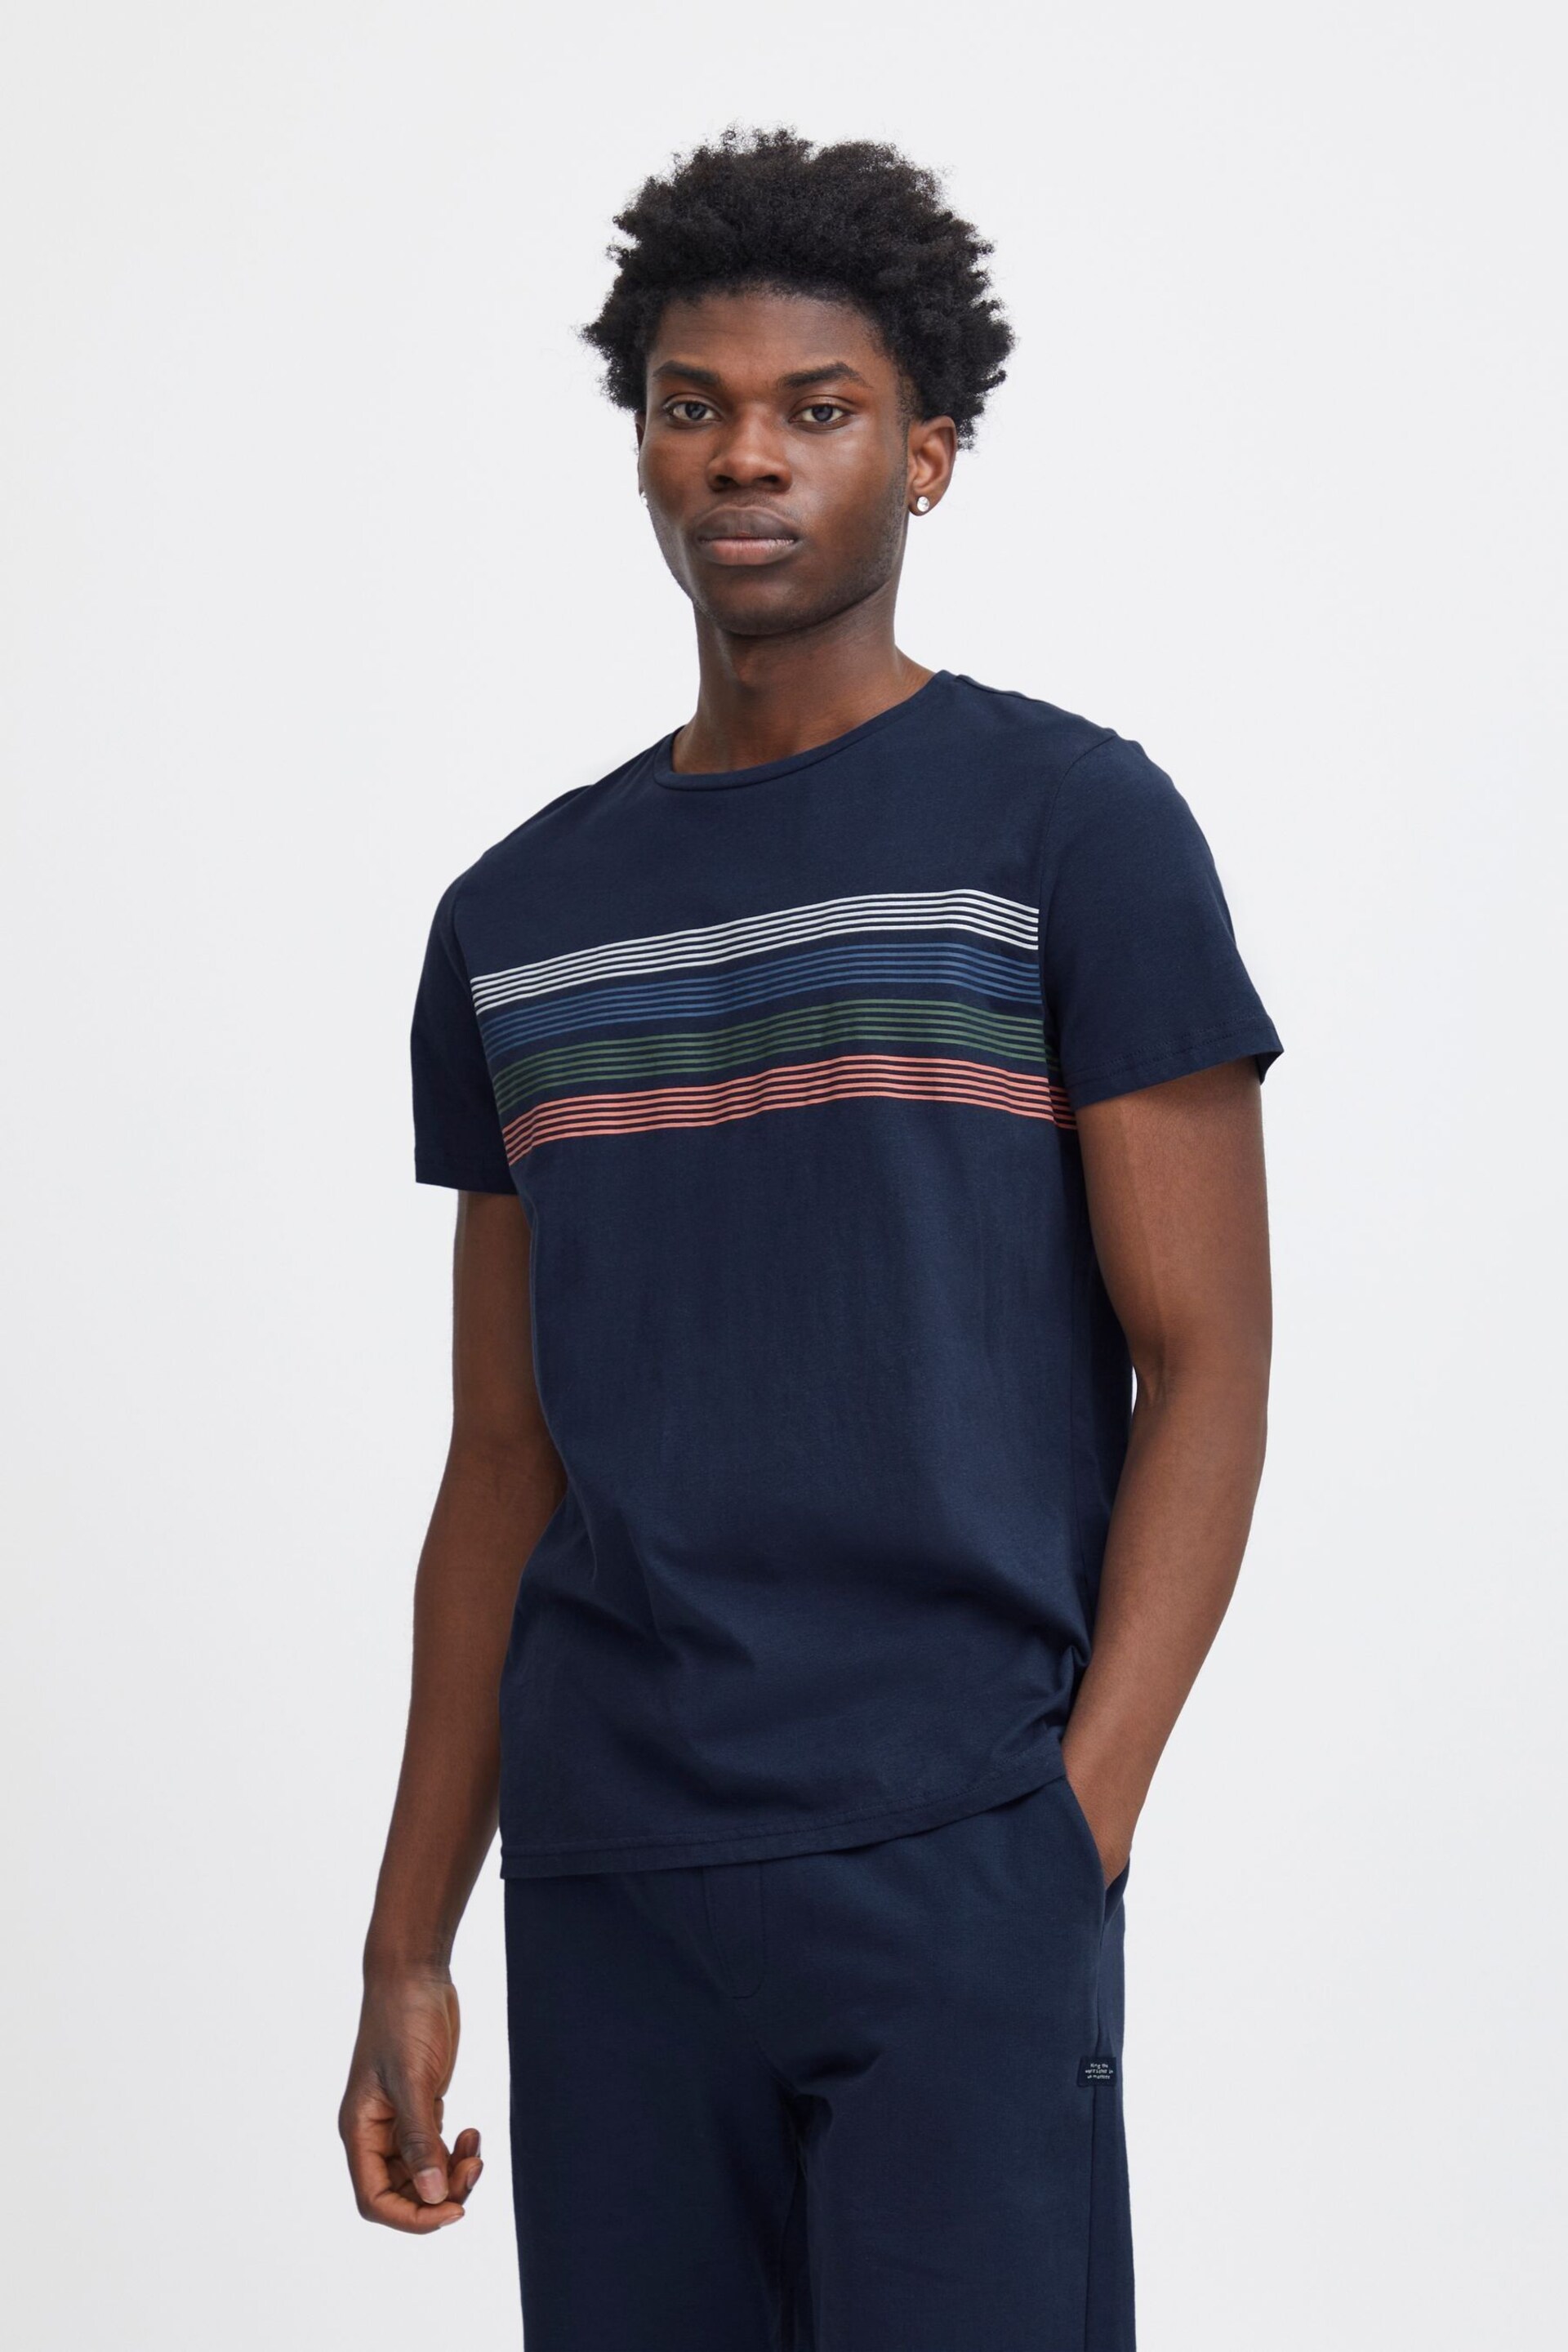 Blend Blue Striped Short Sleeve T-Shirt - Image 1 of 5